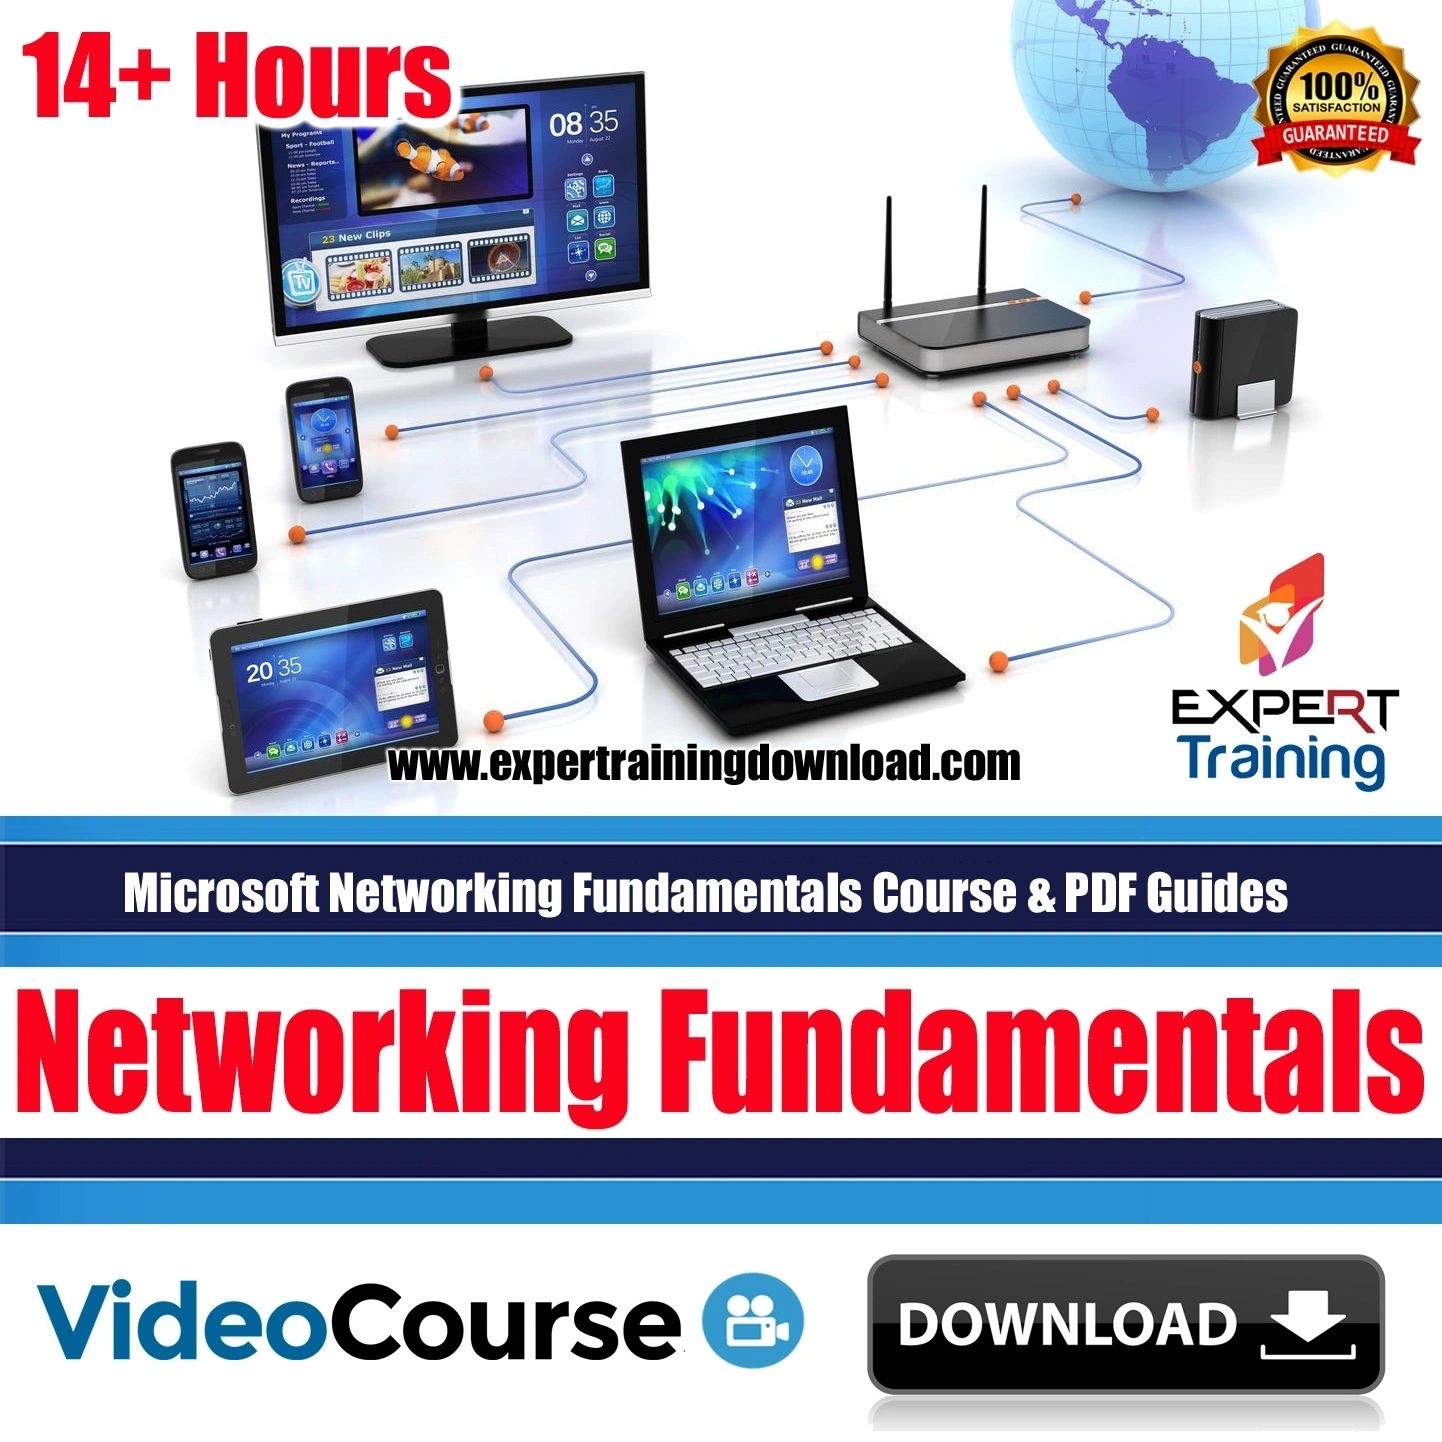 Microsoft Networking Fundamentals Course & PDF Guides